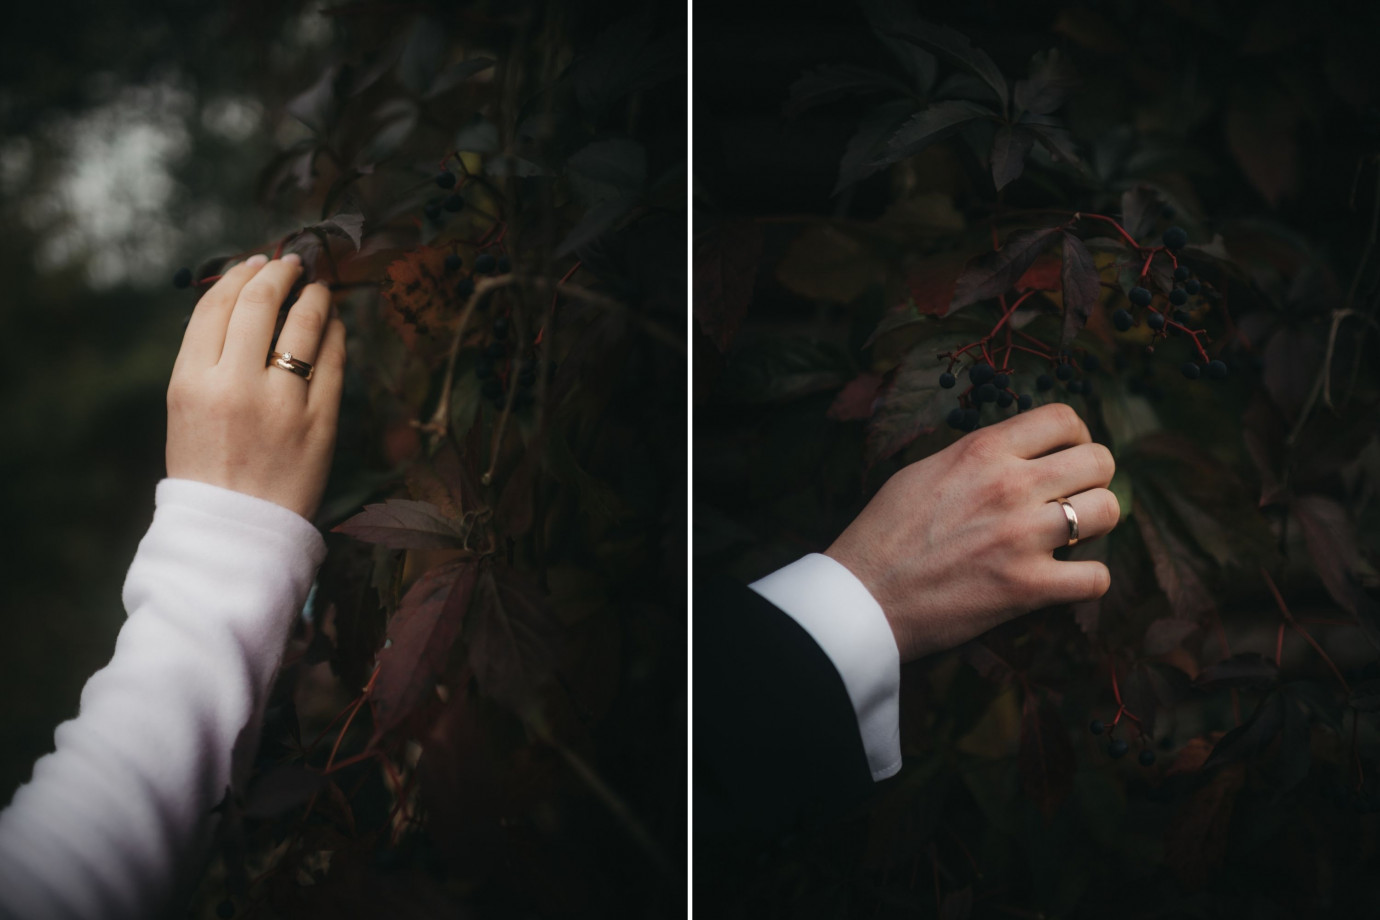 fotograf bydgoszcz fotofaktoria-ida-fuks portfolio zdjecia slubne inspiracje wesele plener slubny sesja slubna